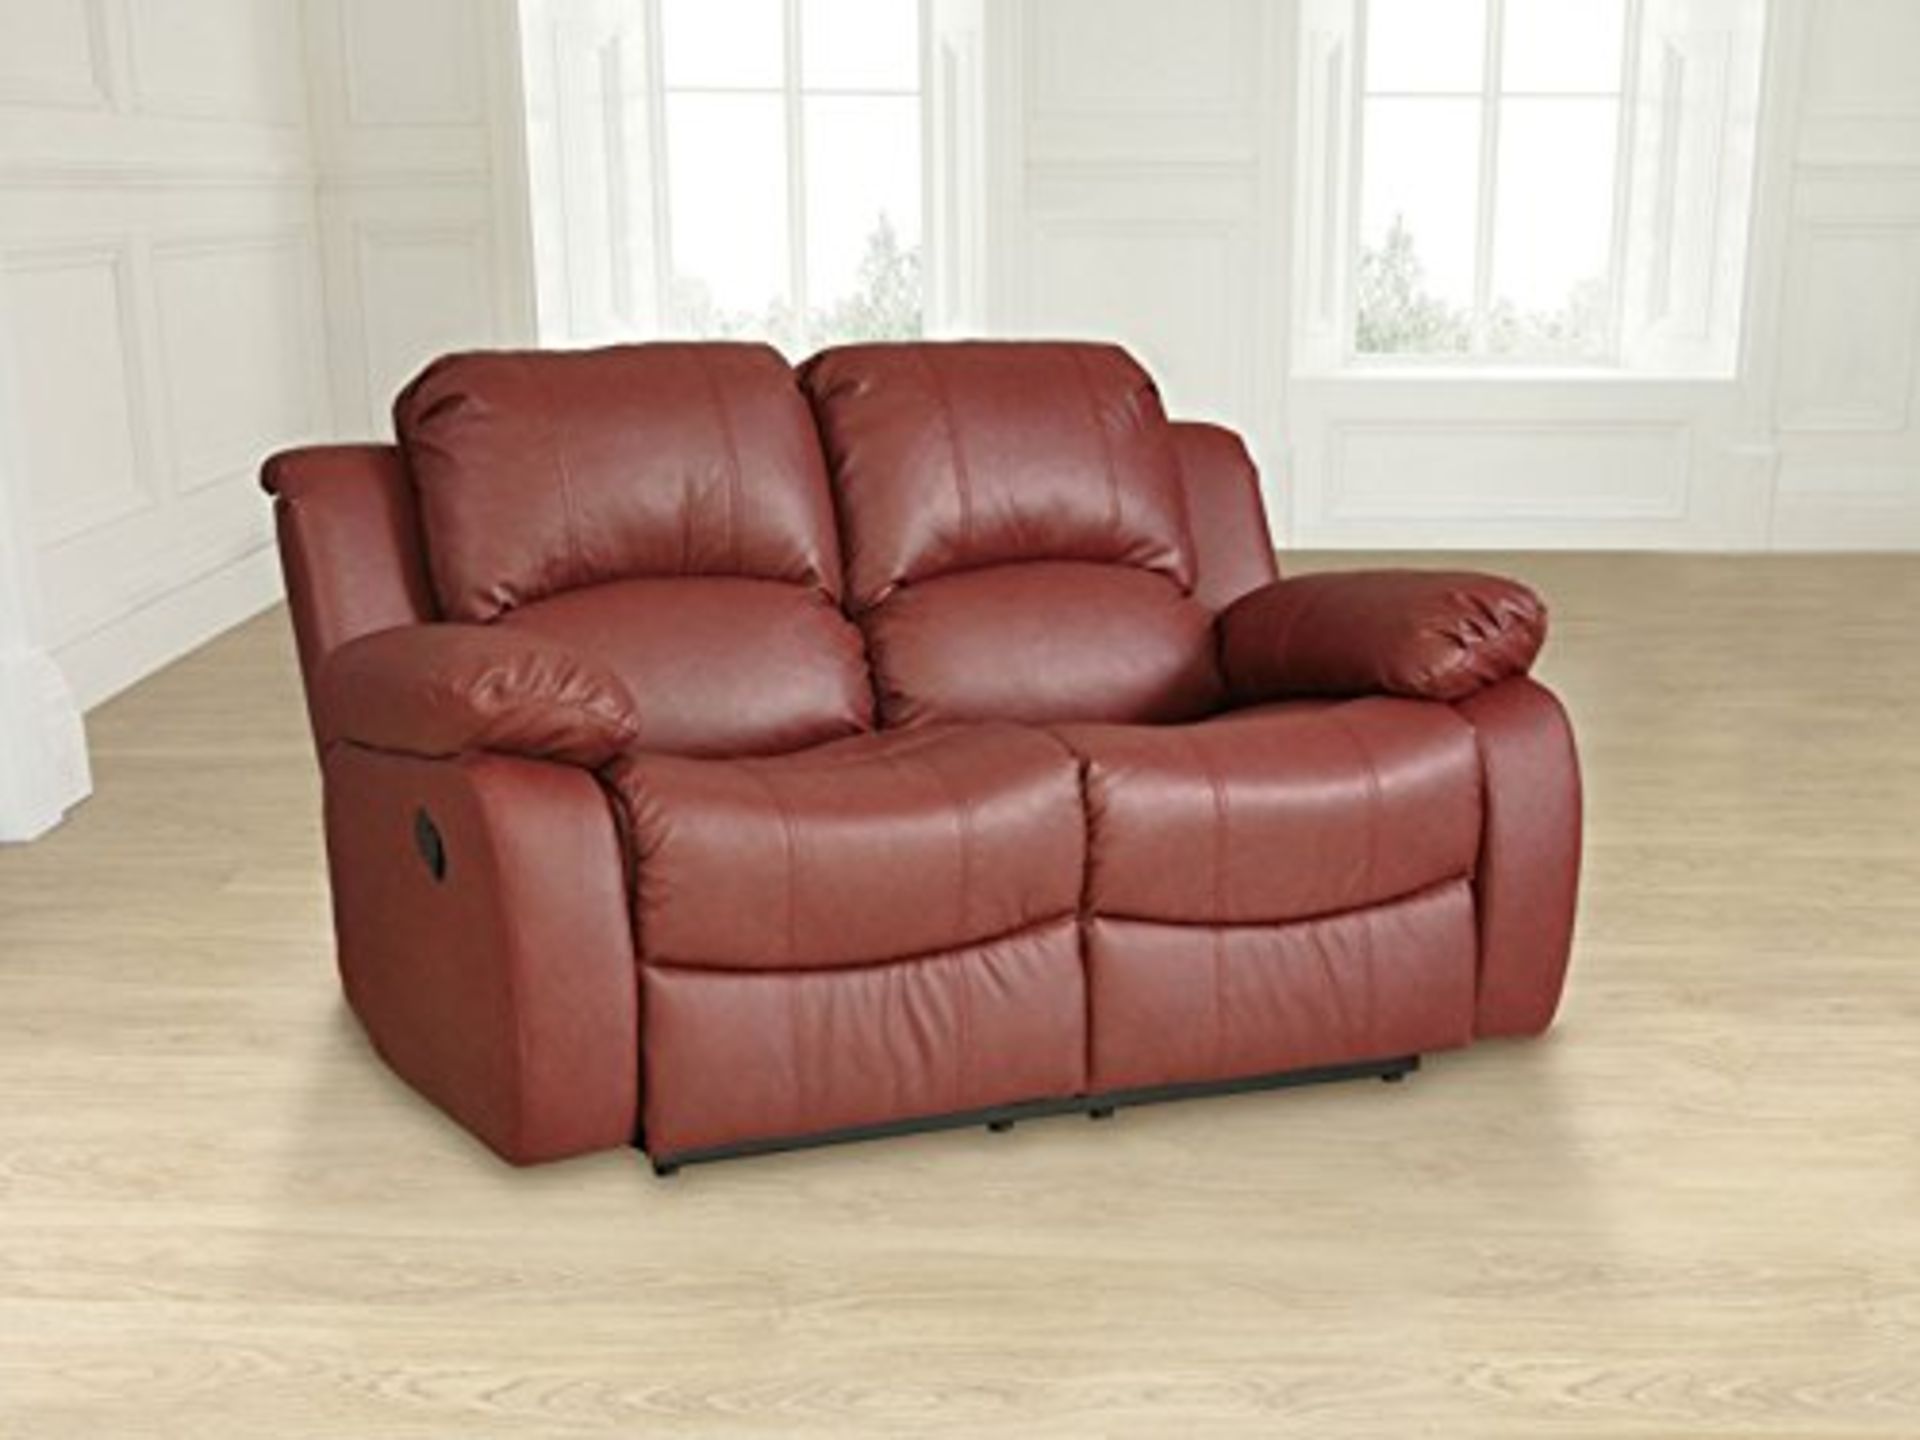 Supreme Valance burgandy leather 3 seater reclining sofa - Image 3 of 3